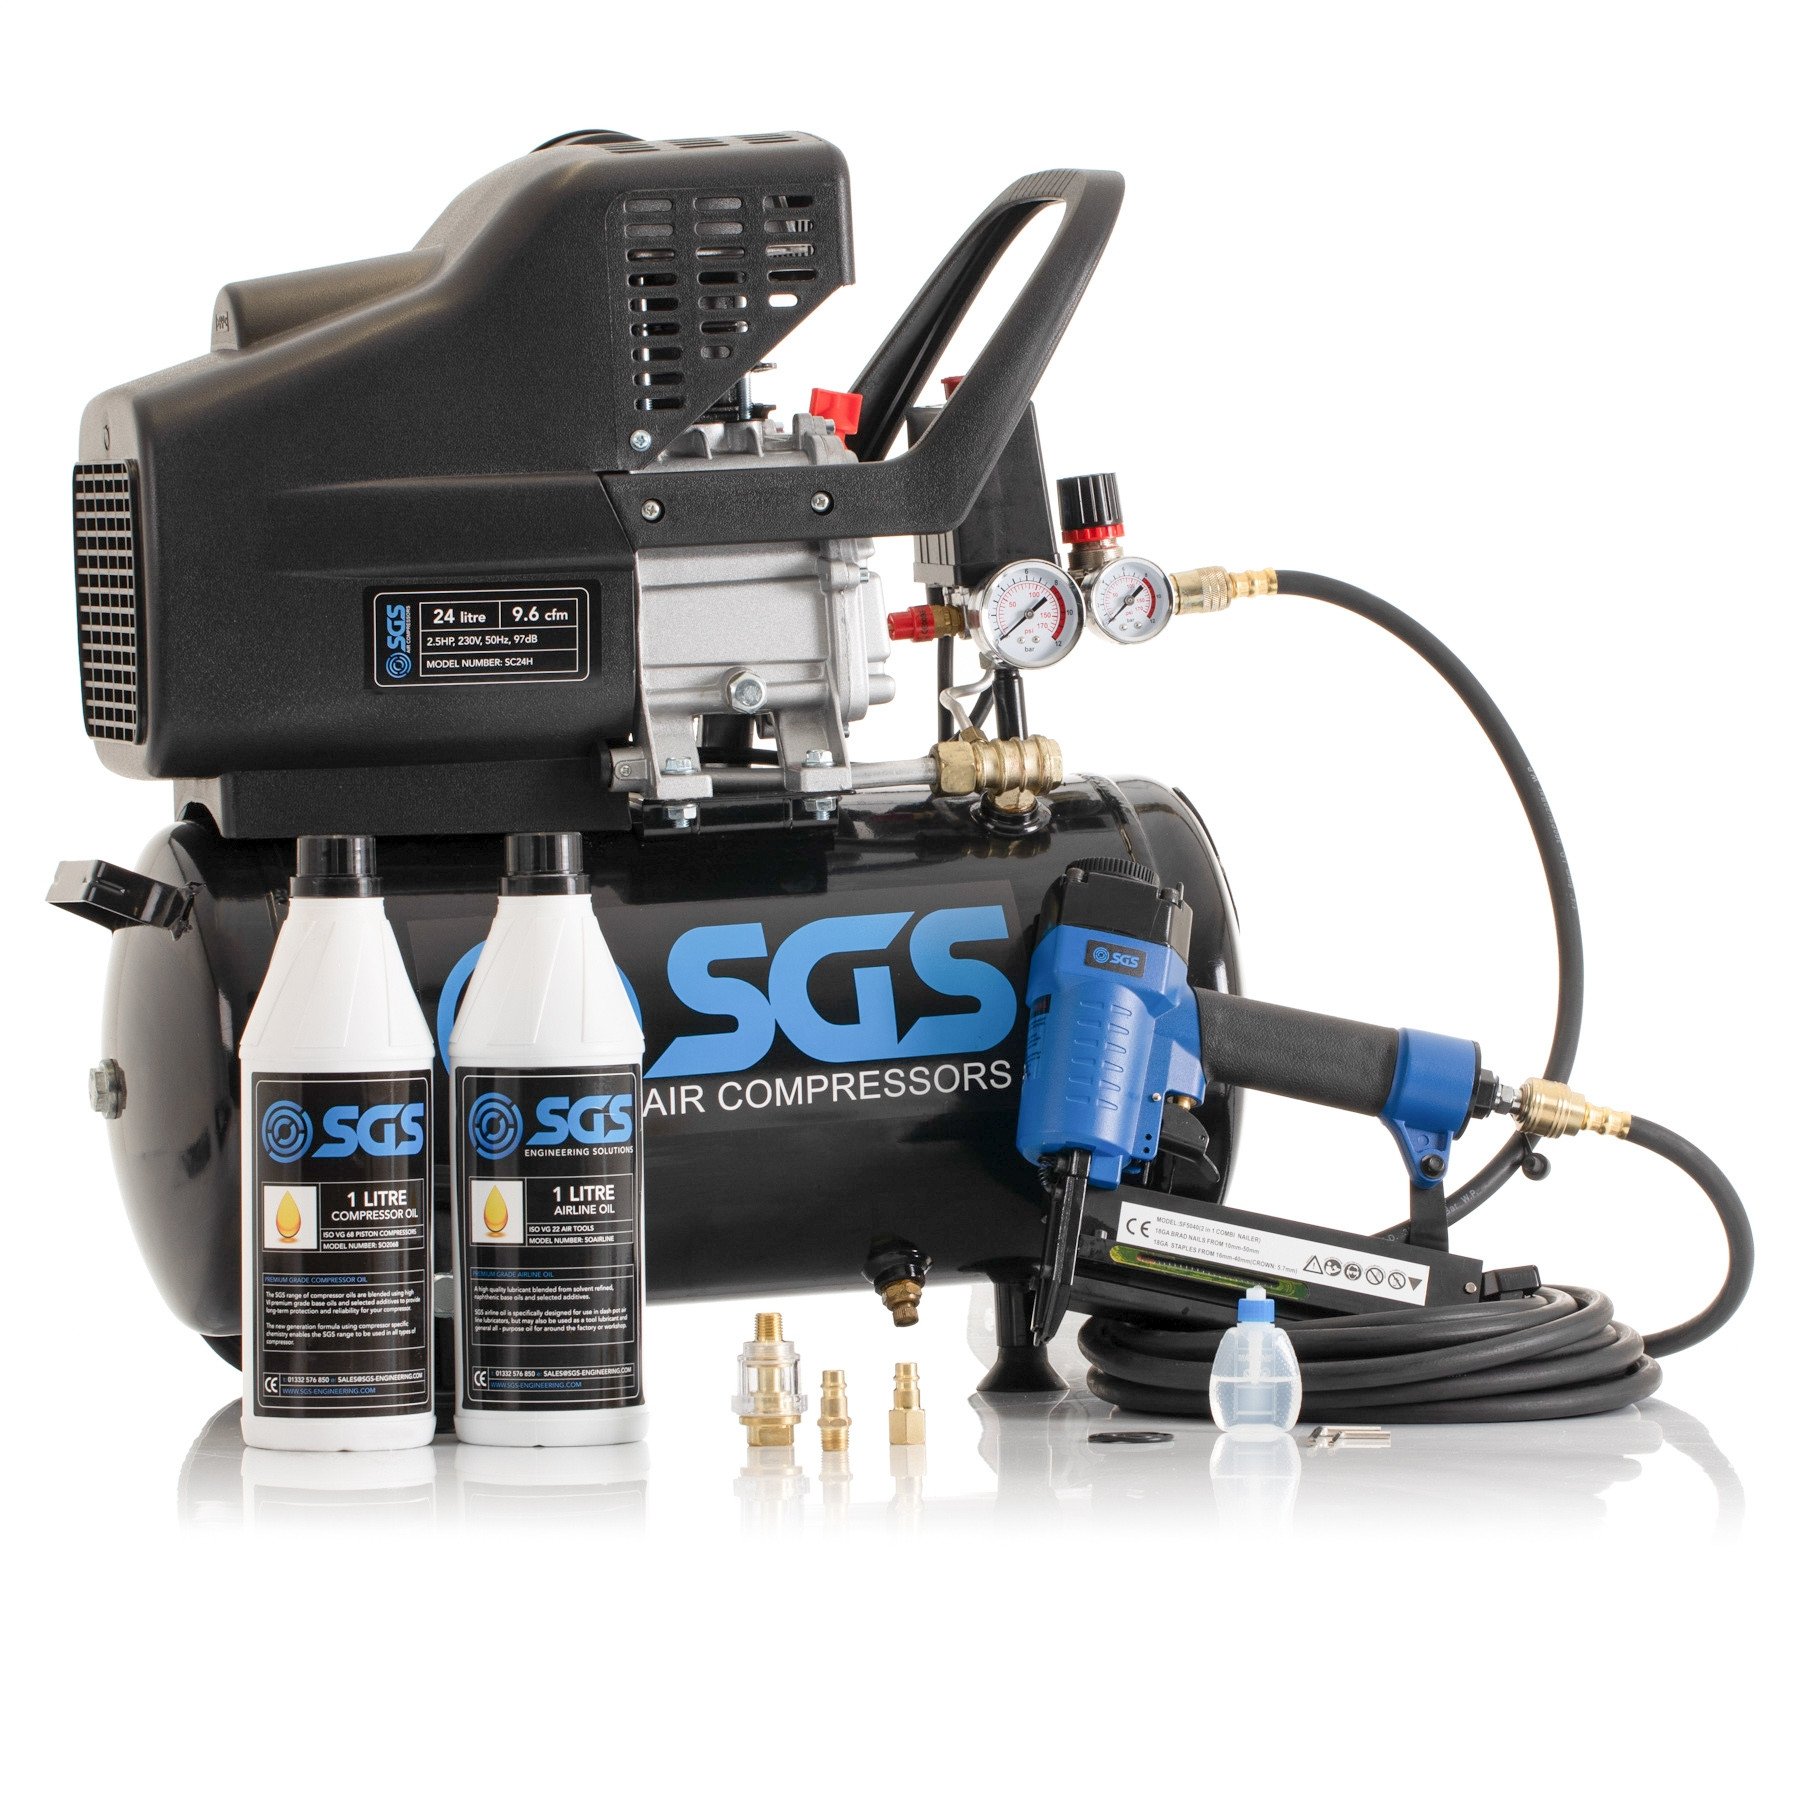 SGS 24升直接驱动空气压缩机和2 in 1空气指甲 /钉书钉-9.6CFM 2.5HP 24L